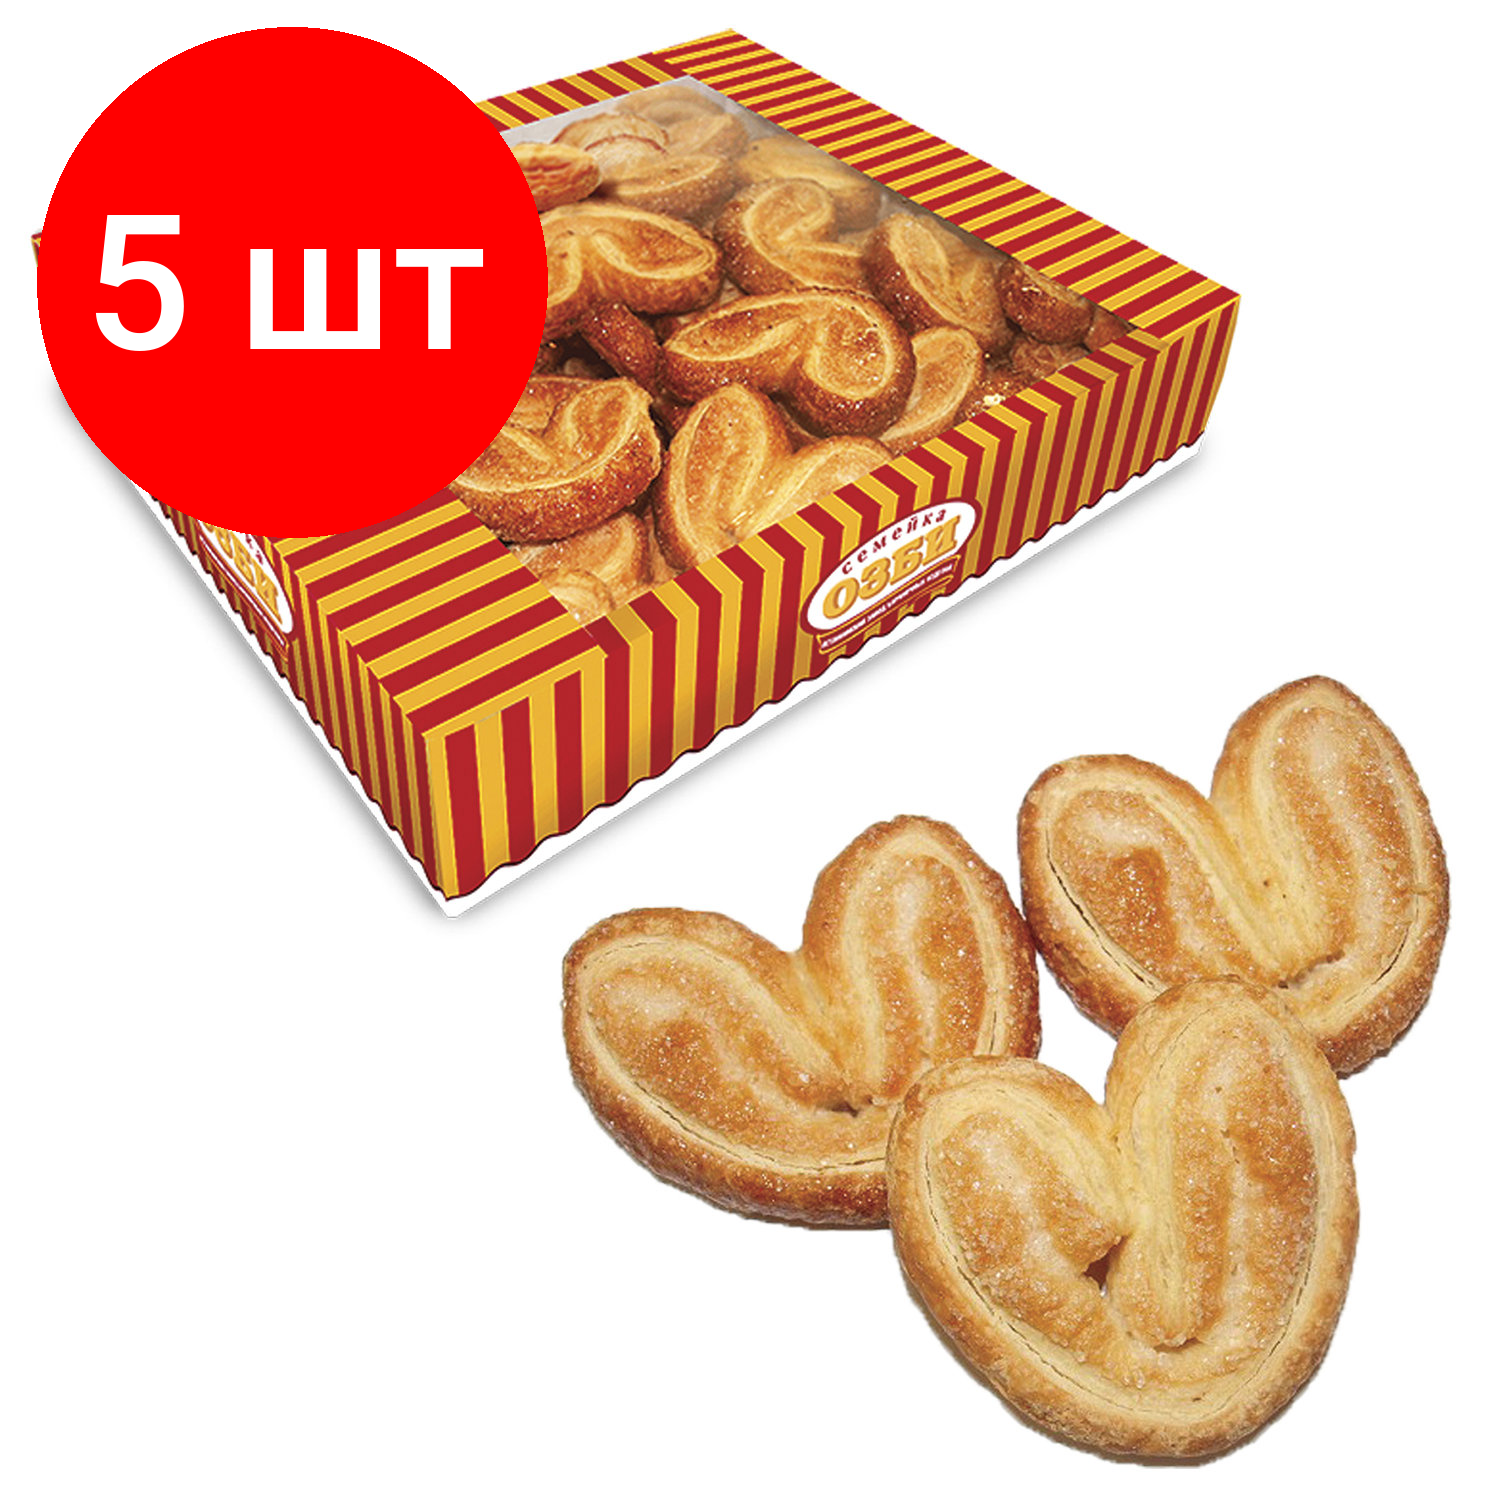 Комплект 5 шт, Печенье семейка озби "Мини-плюшки", ушки с сахаром, 500 г, гофрокороб, 990